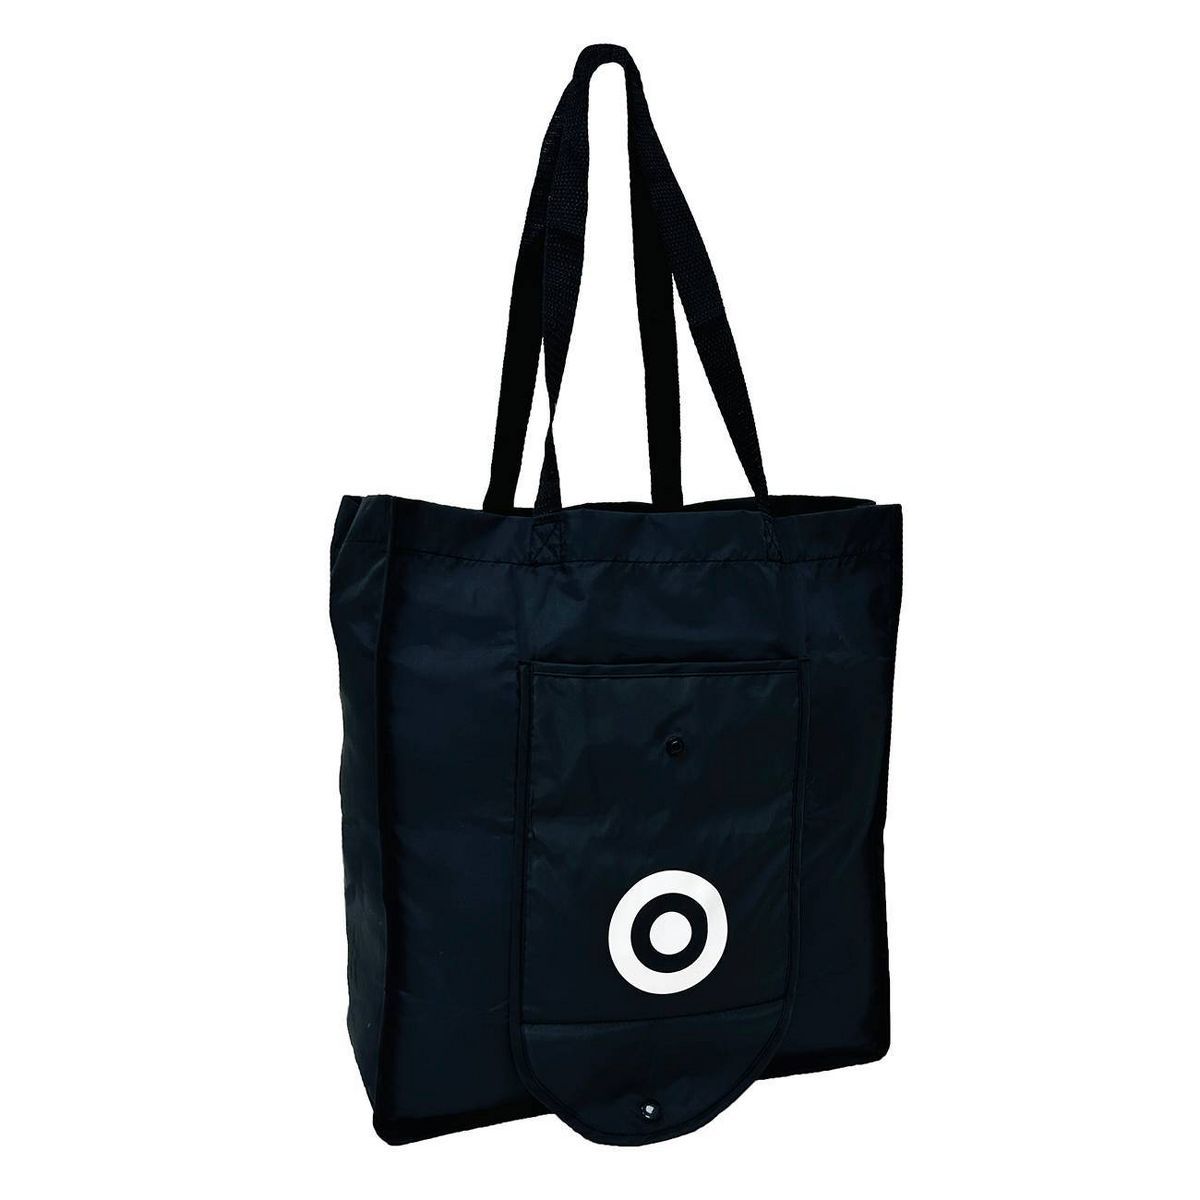 Foldable Reusable Bag Black | Target